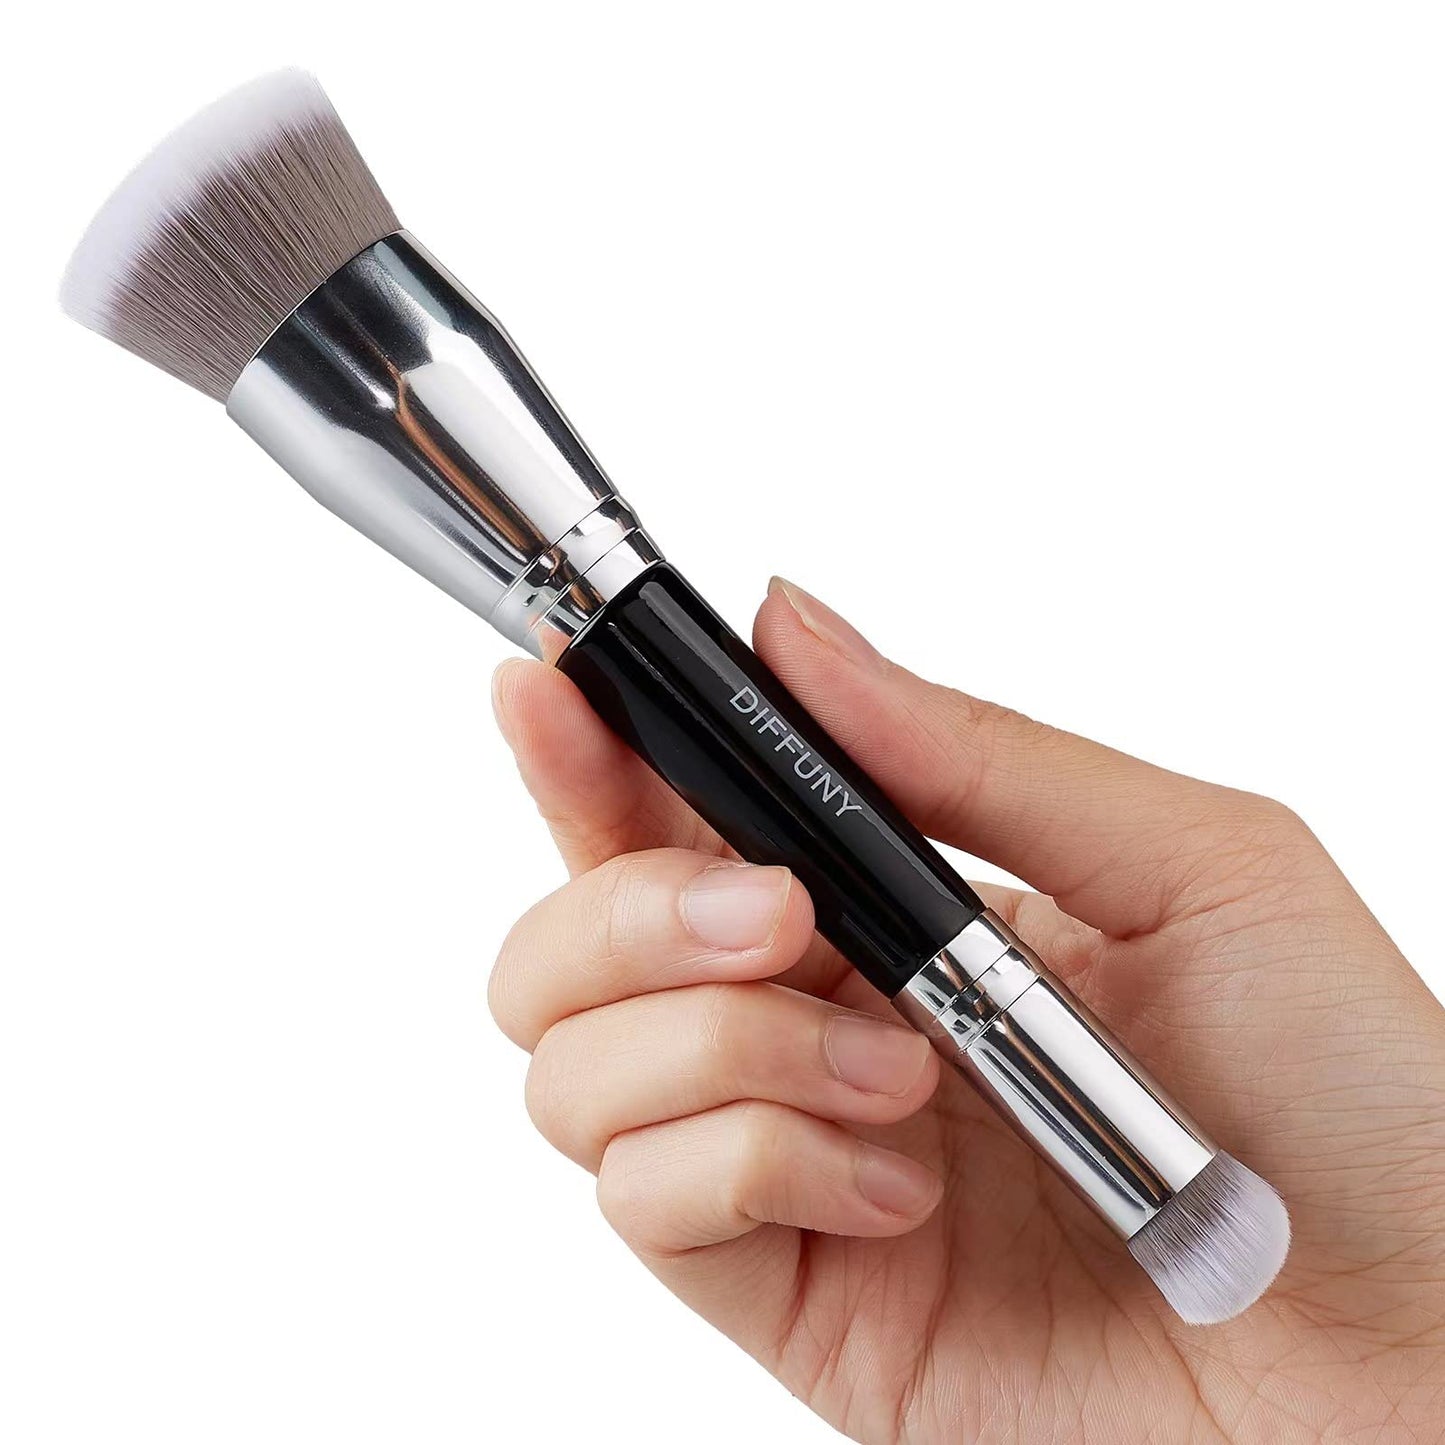 DIFFUNY Large Makeup Brushes Double Ended Foundation Brush & Concealer Brush, Flat Top Kabuki Foundation Brush for Liquid, Cream, Blending, Buffing, Concealer, Dual Sided Make Up Brushes